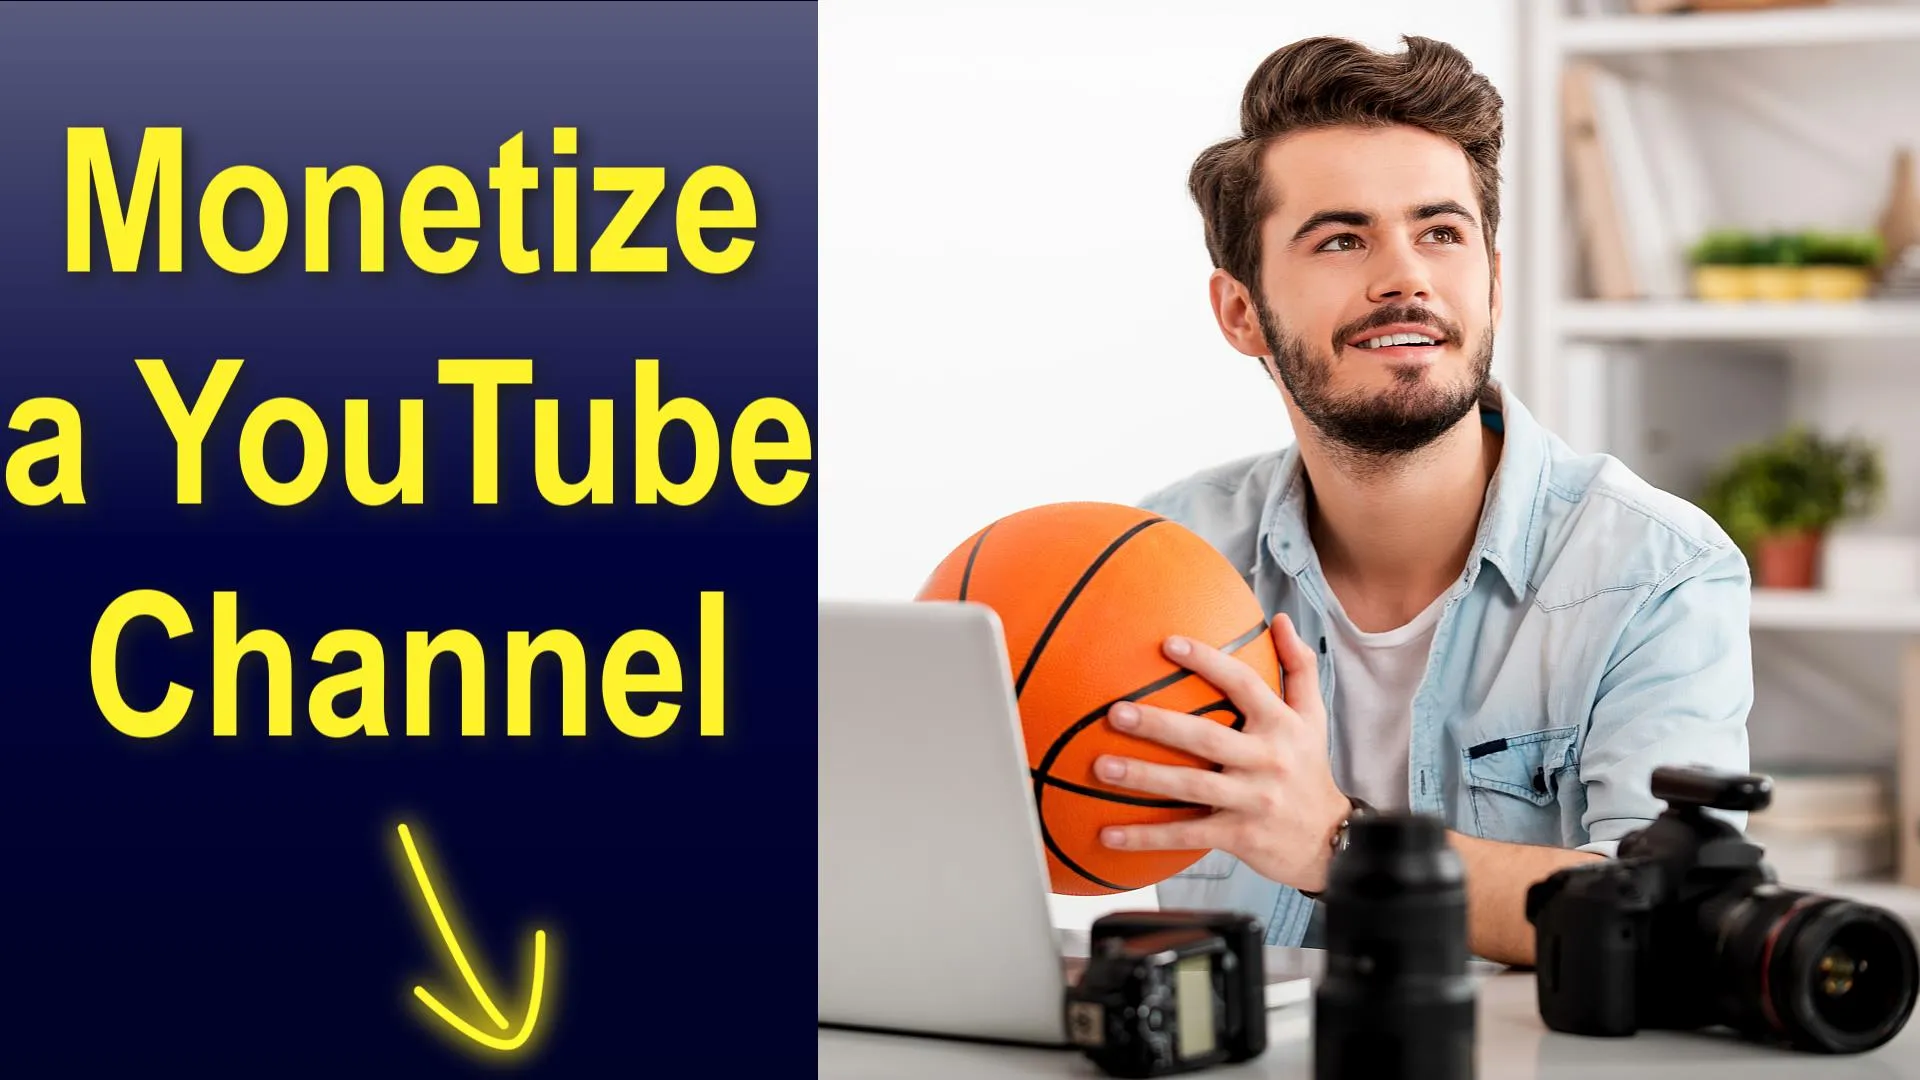 Monetize a YouTube Channel